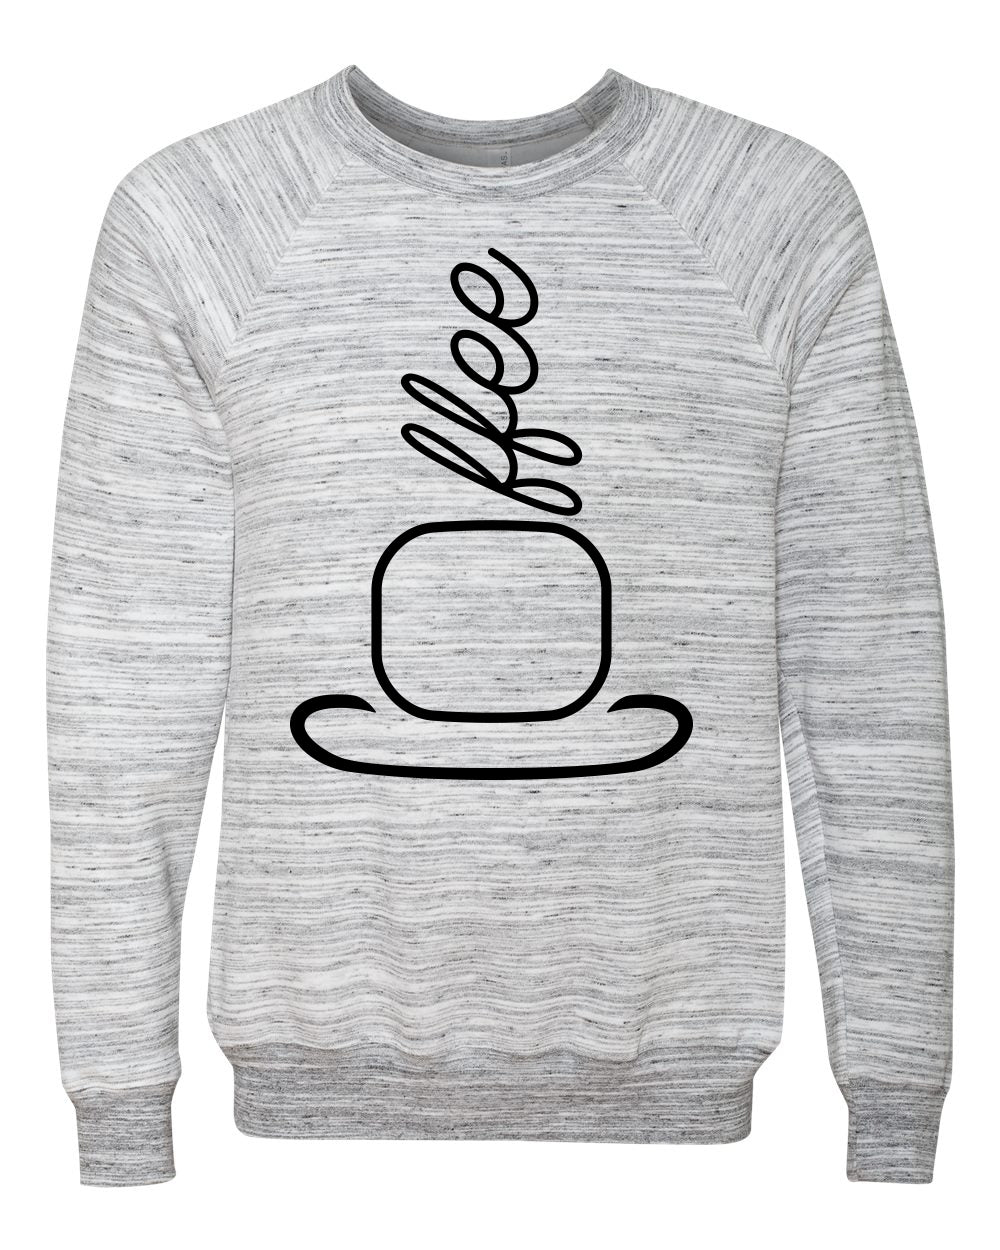 Coffee sweatshirt.  Stylized coffee cup with steam spelling Coffee. Crew neck sweatshirt